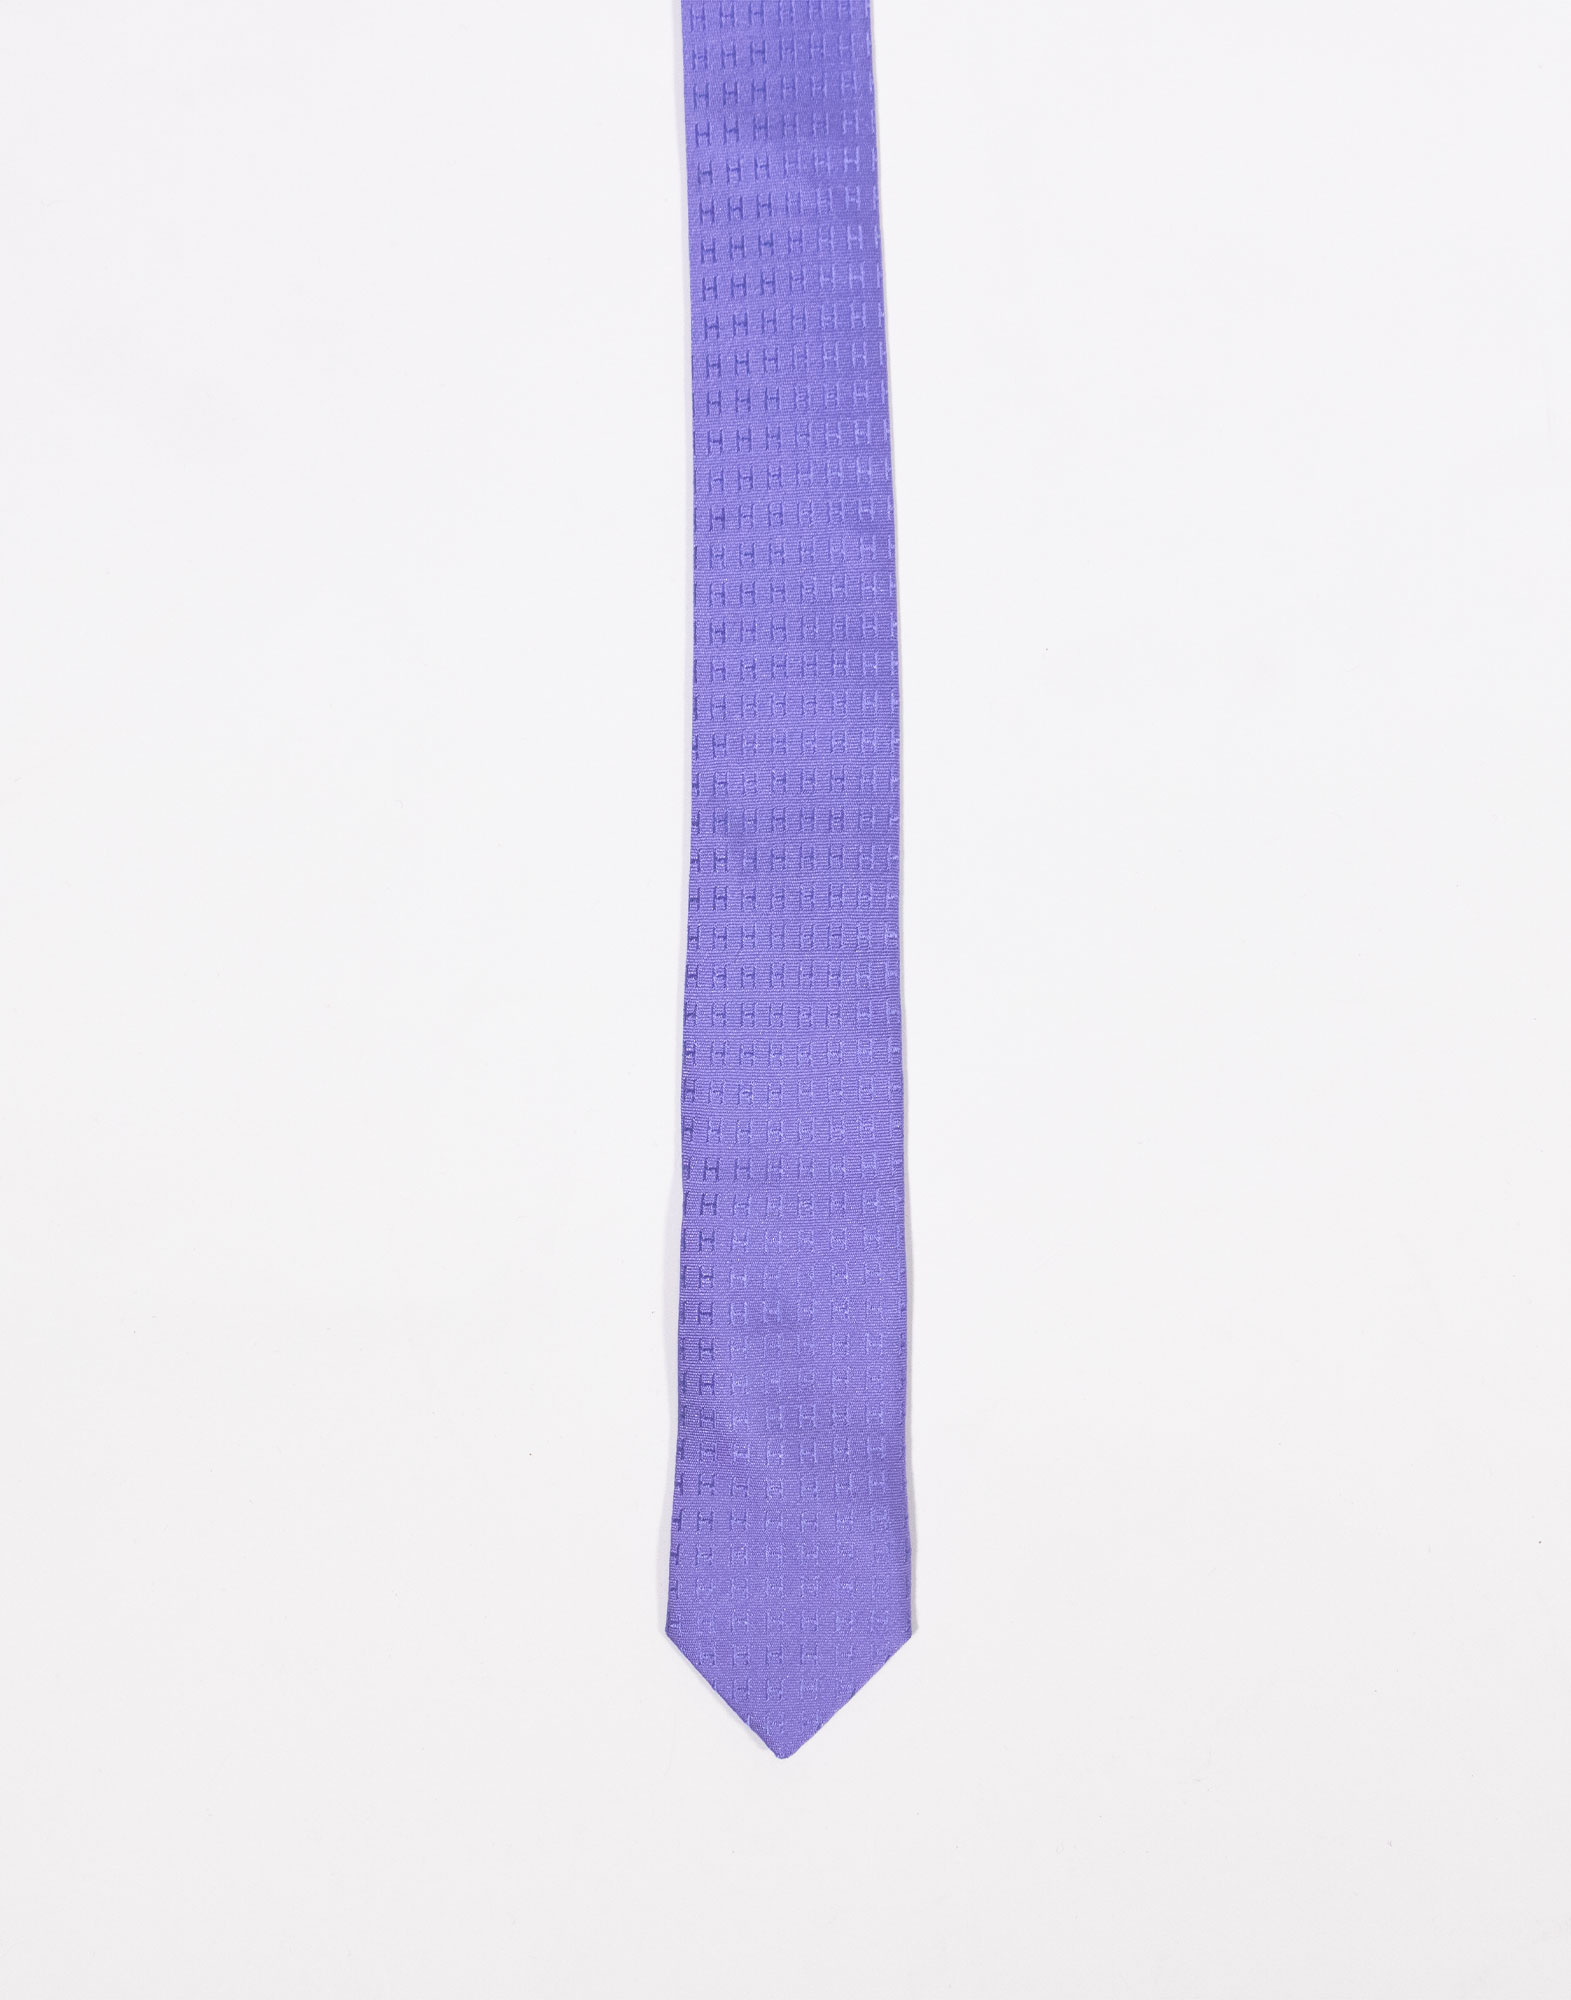 HERMES - Cravatta monogramma viola in seta